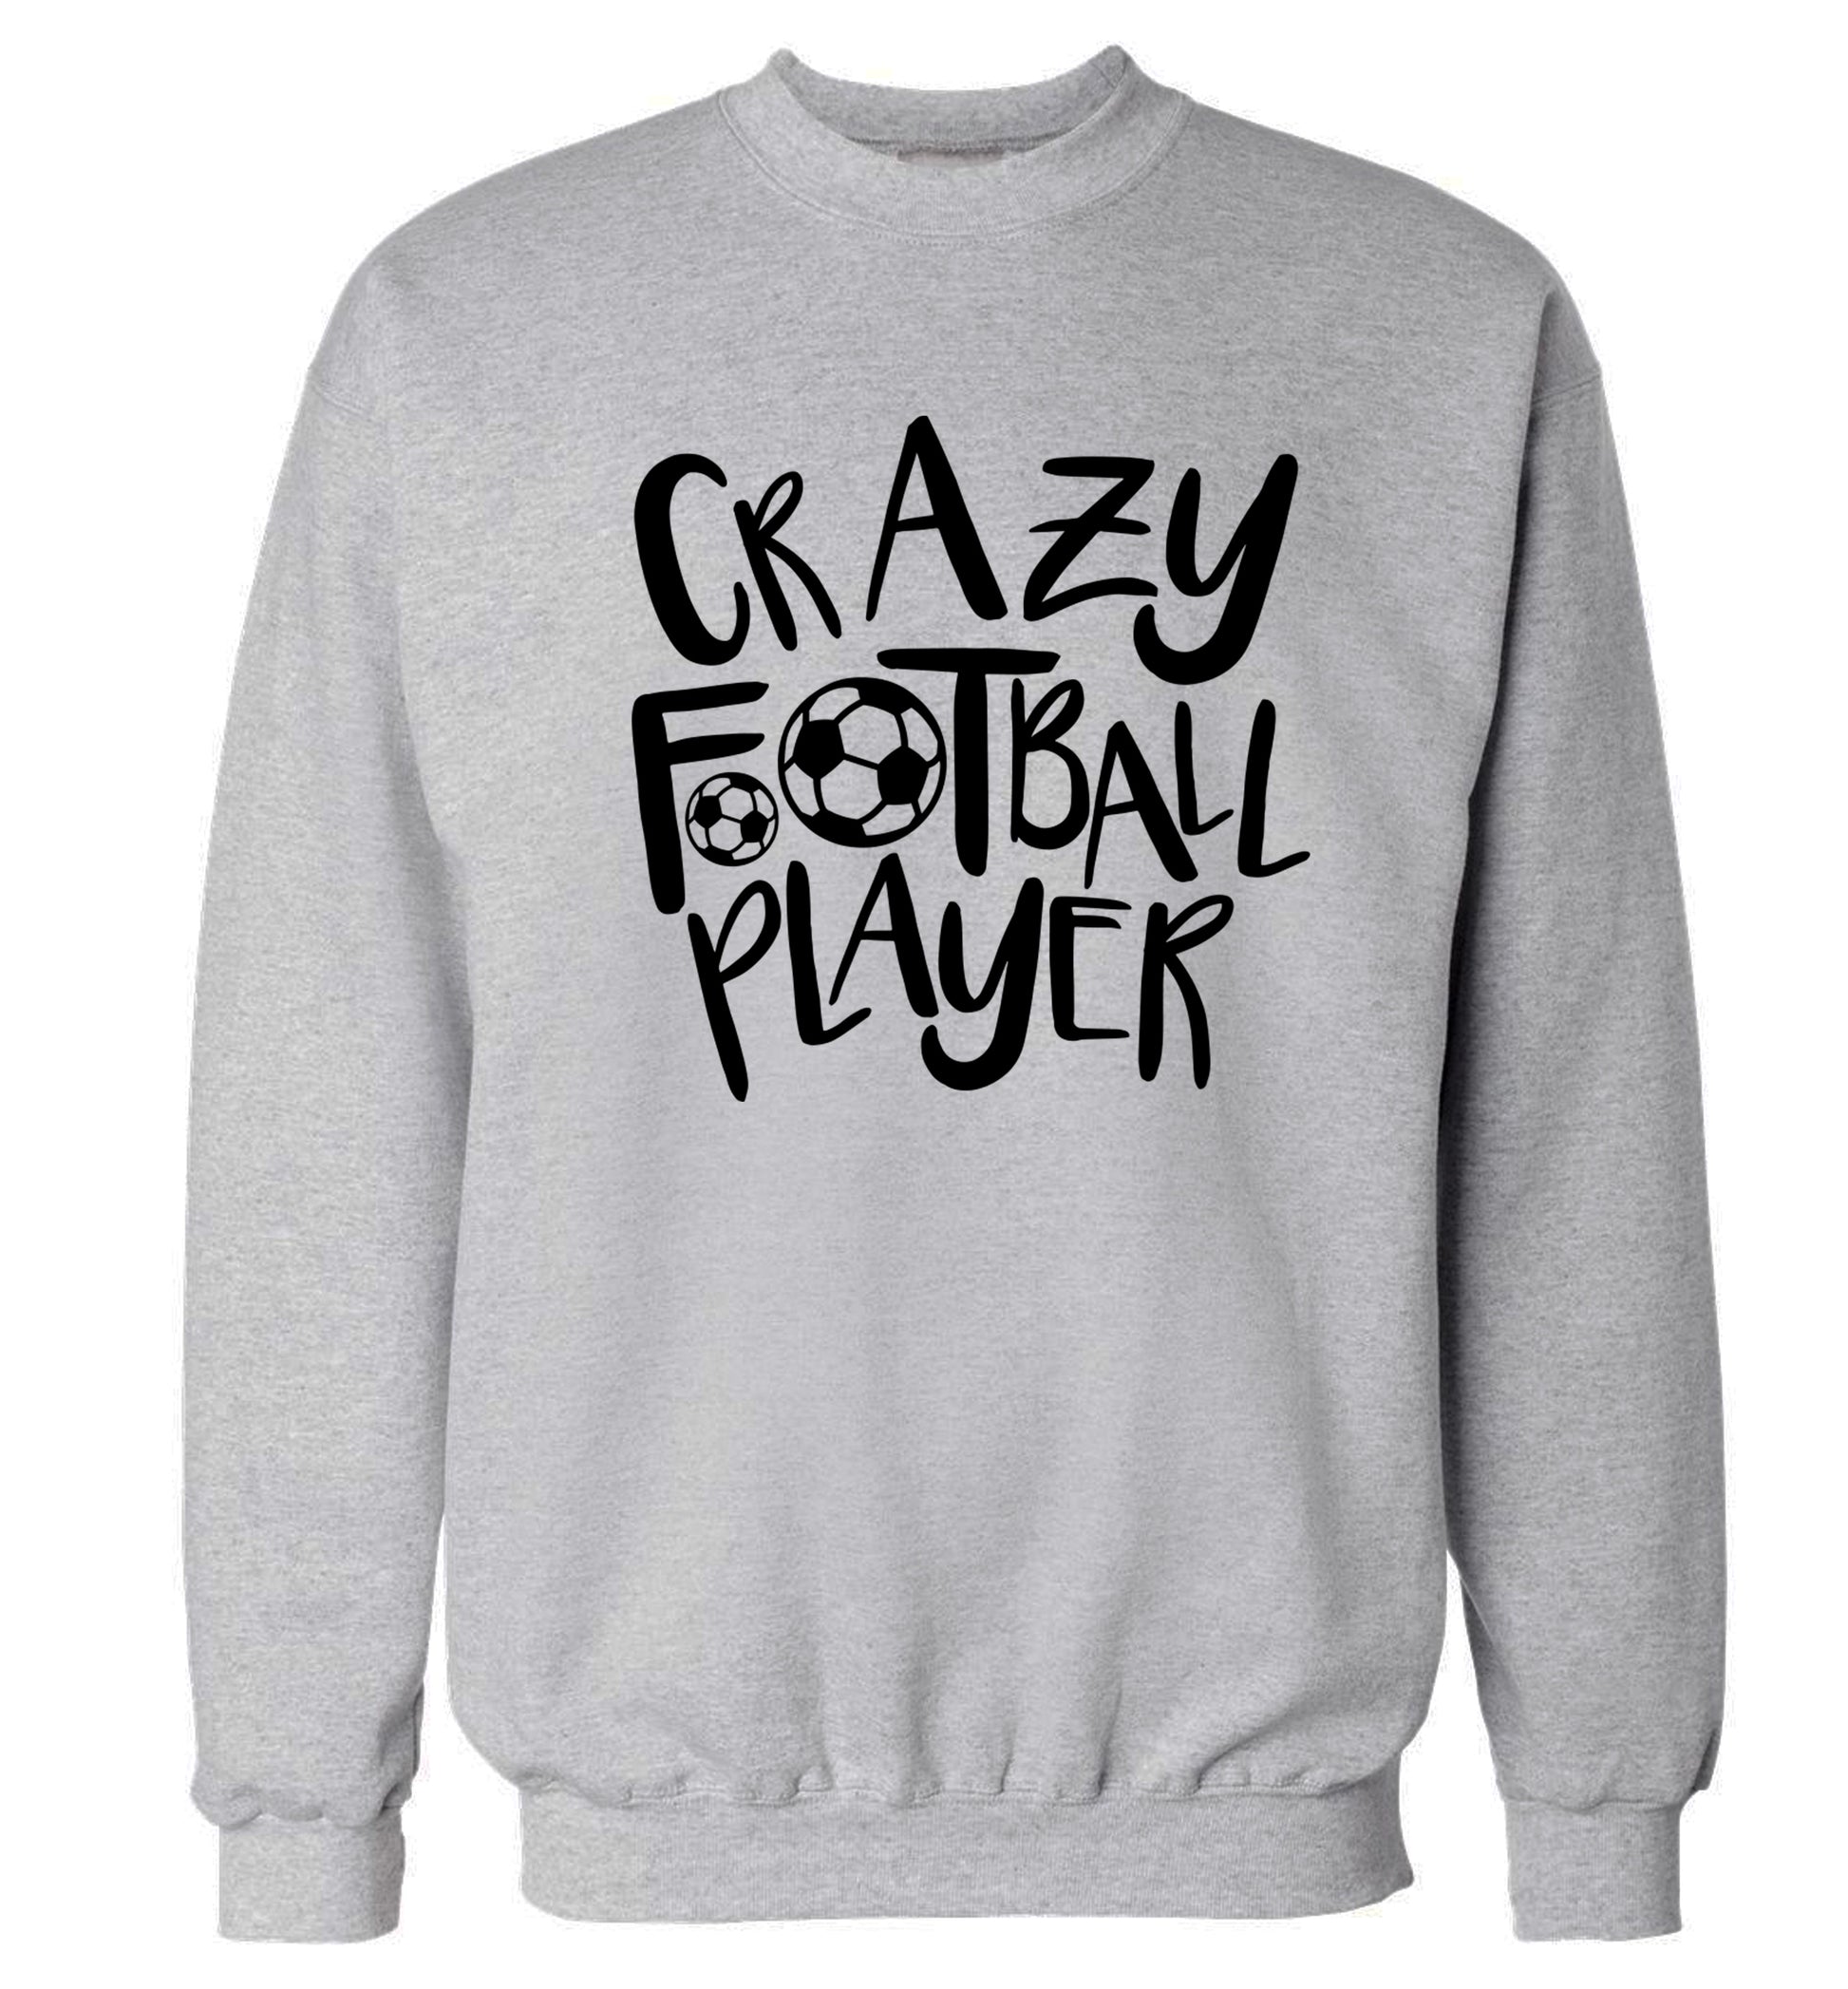 Crazy football player Adult's unisexgrey Sweater 2XL